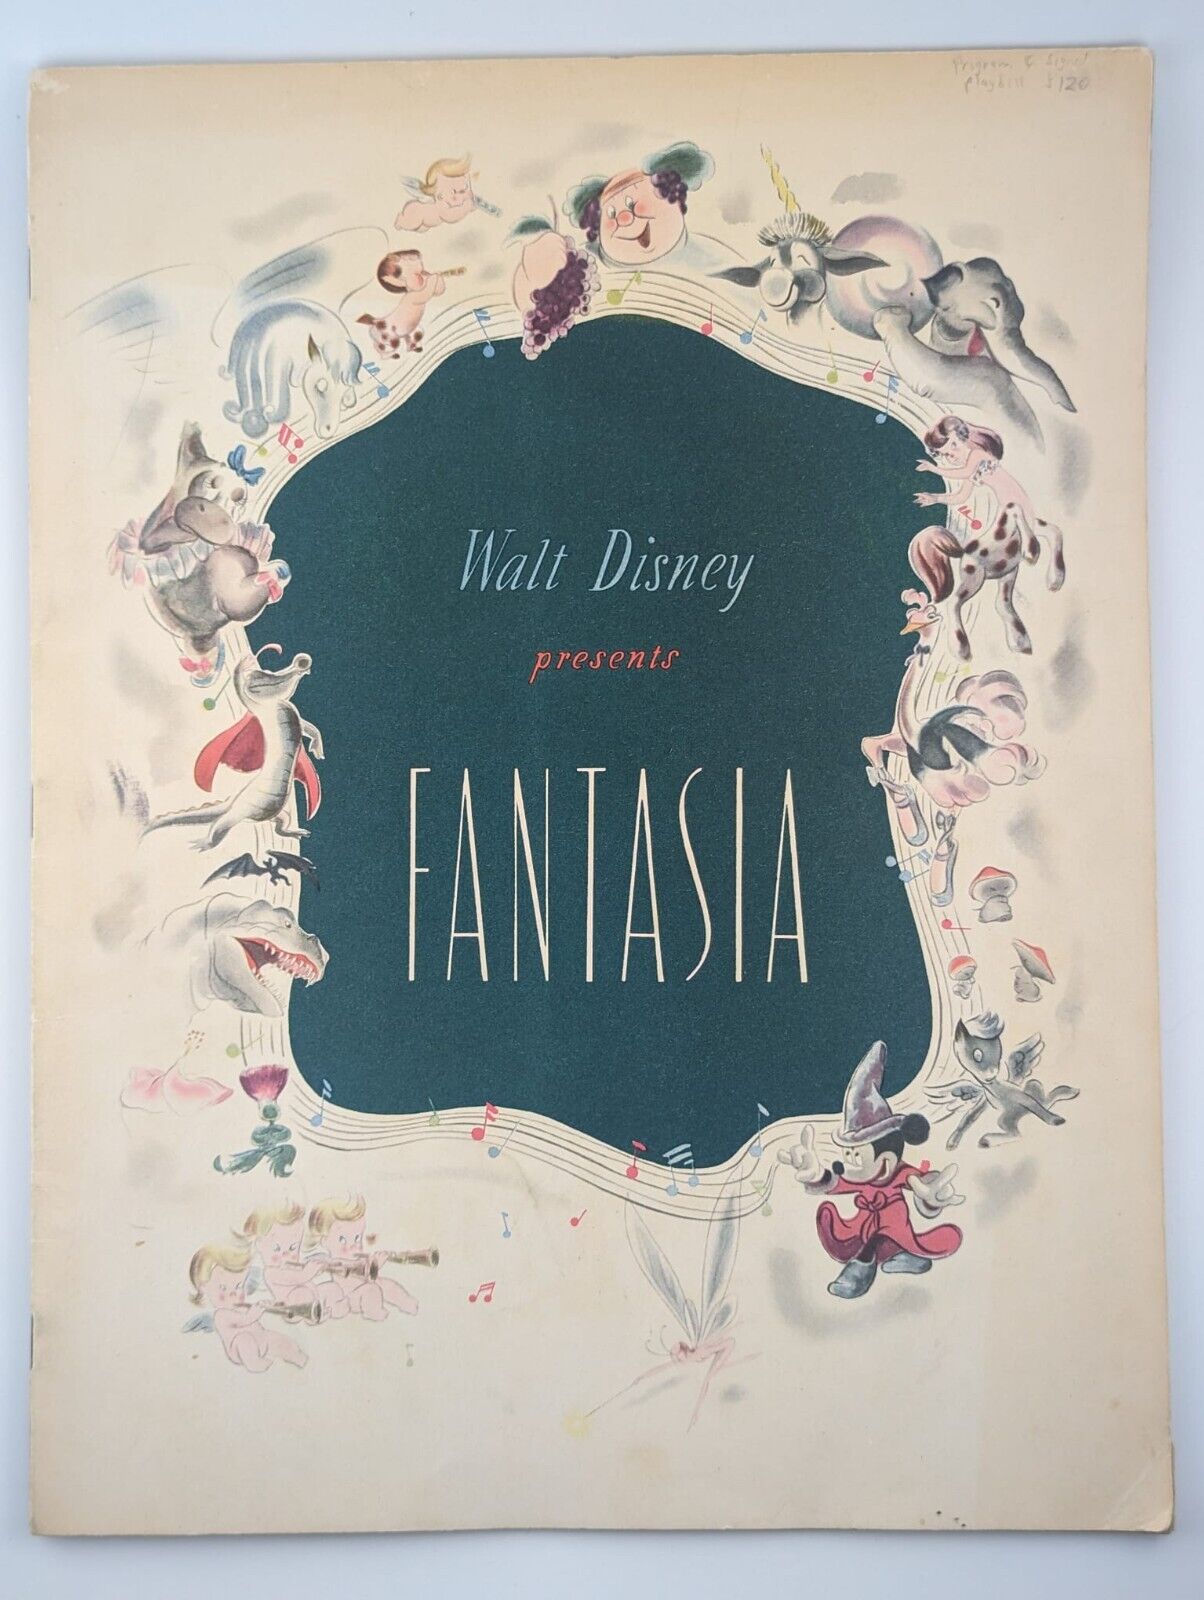 Walt Disney Fantasia, the Philadelphia Orchestra, signed by Leopold Stokowski